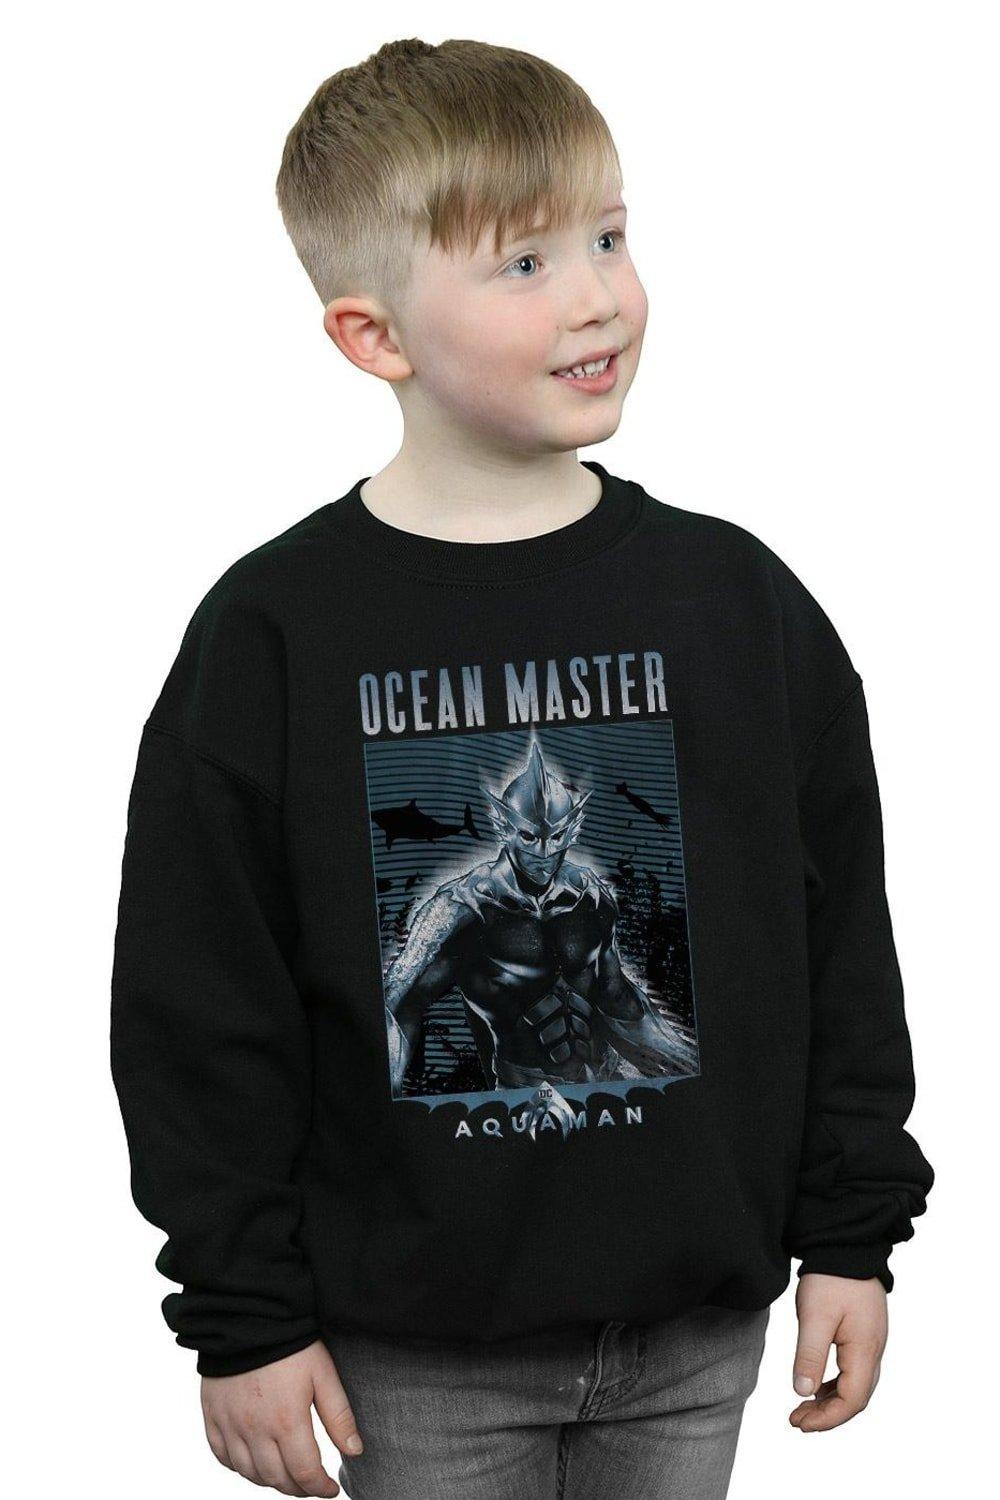 Aquaman Ocean Master Sweatshirt